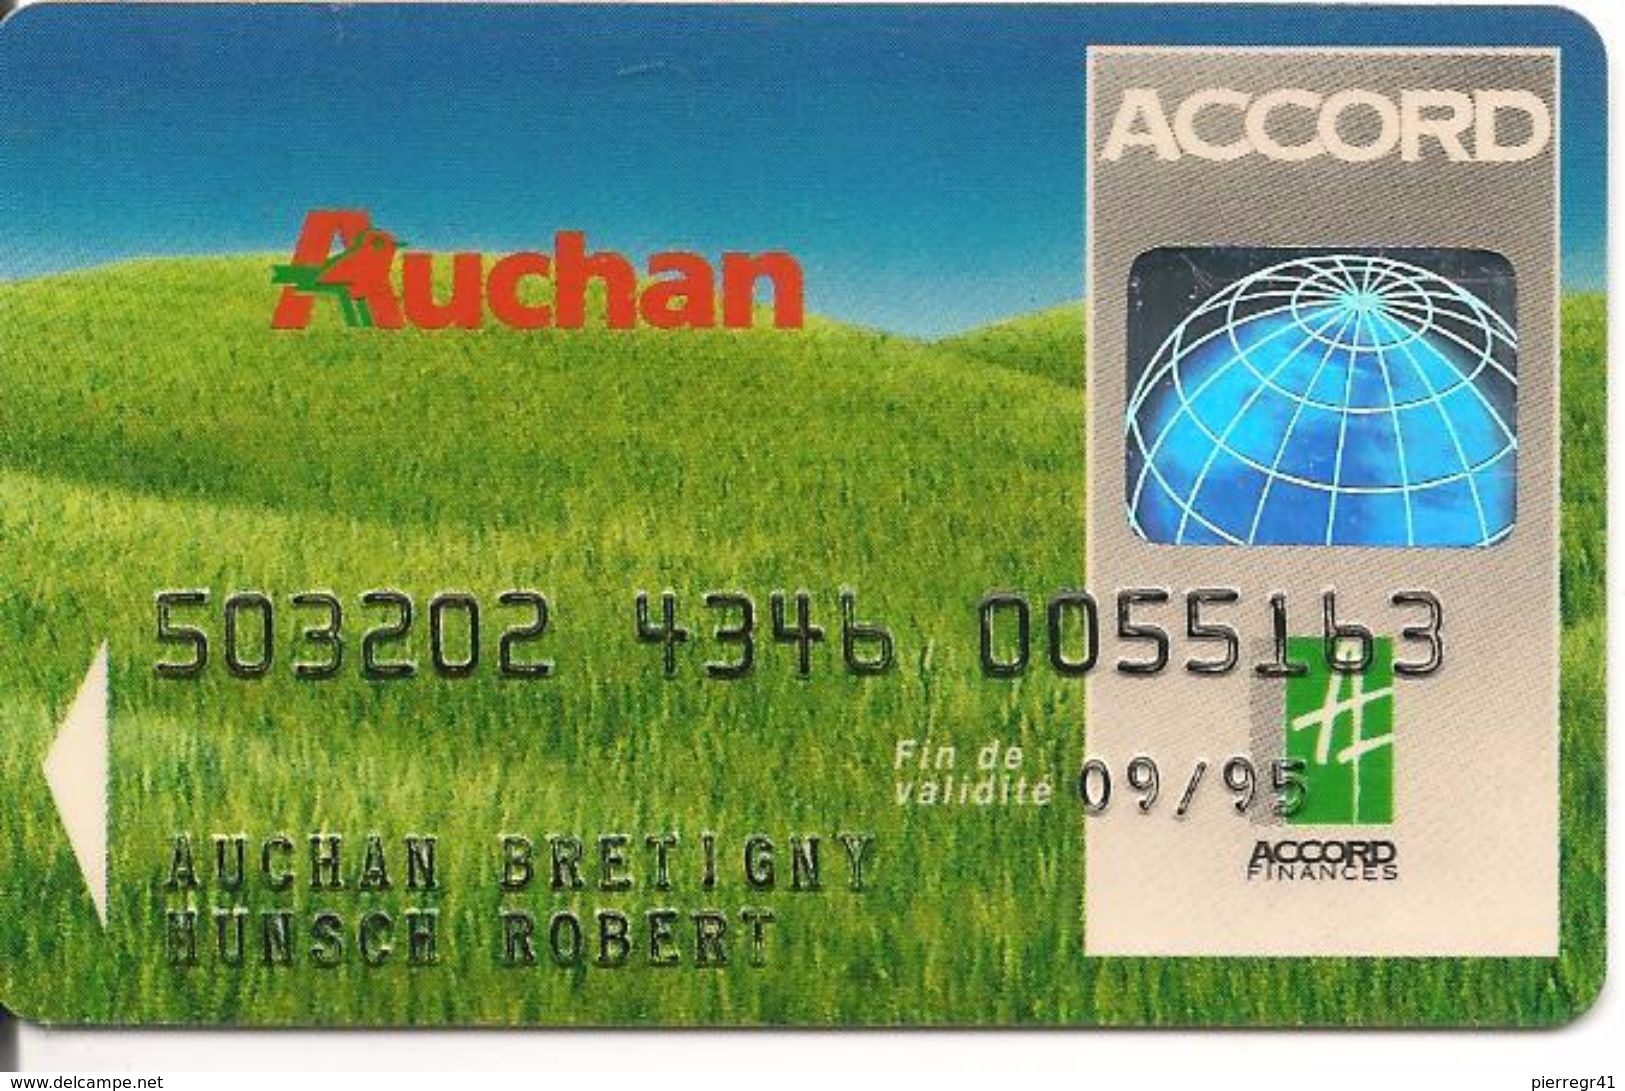 -CARTEç-MAGNETIQUE-FIDELITE ACCORD AUCHAN BRETIGNY-Exp 09/95-V°SOLAIC 45060-TBE-RARE - Disposable Credit Card